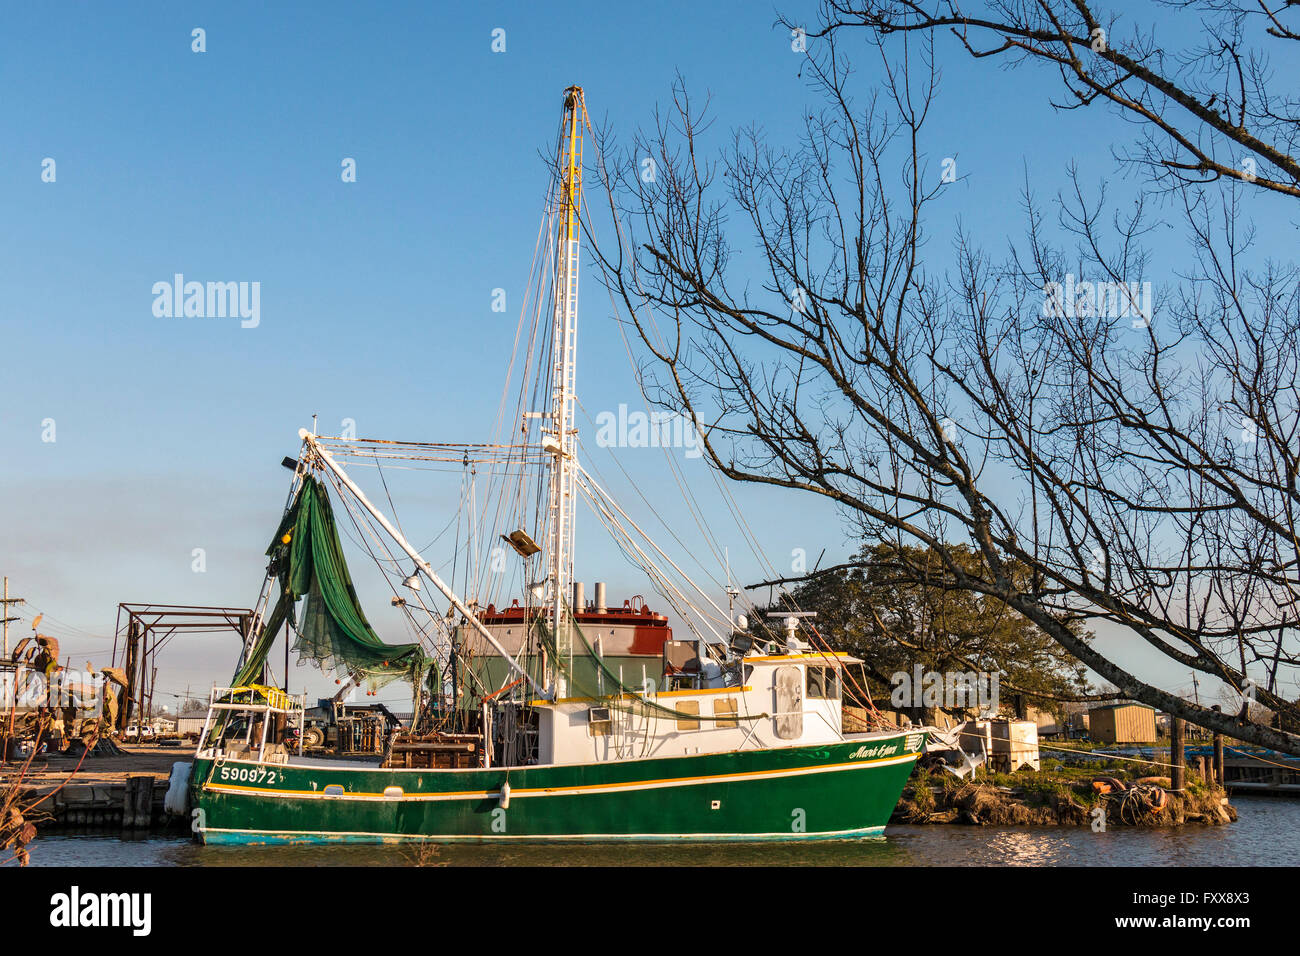 Shrimp boat louisiana hi-res stock photography and images - Alamy